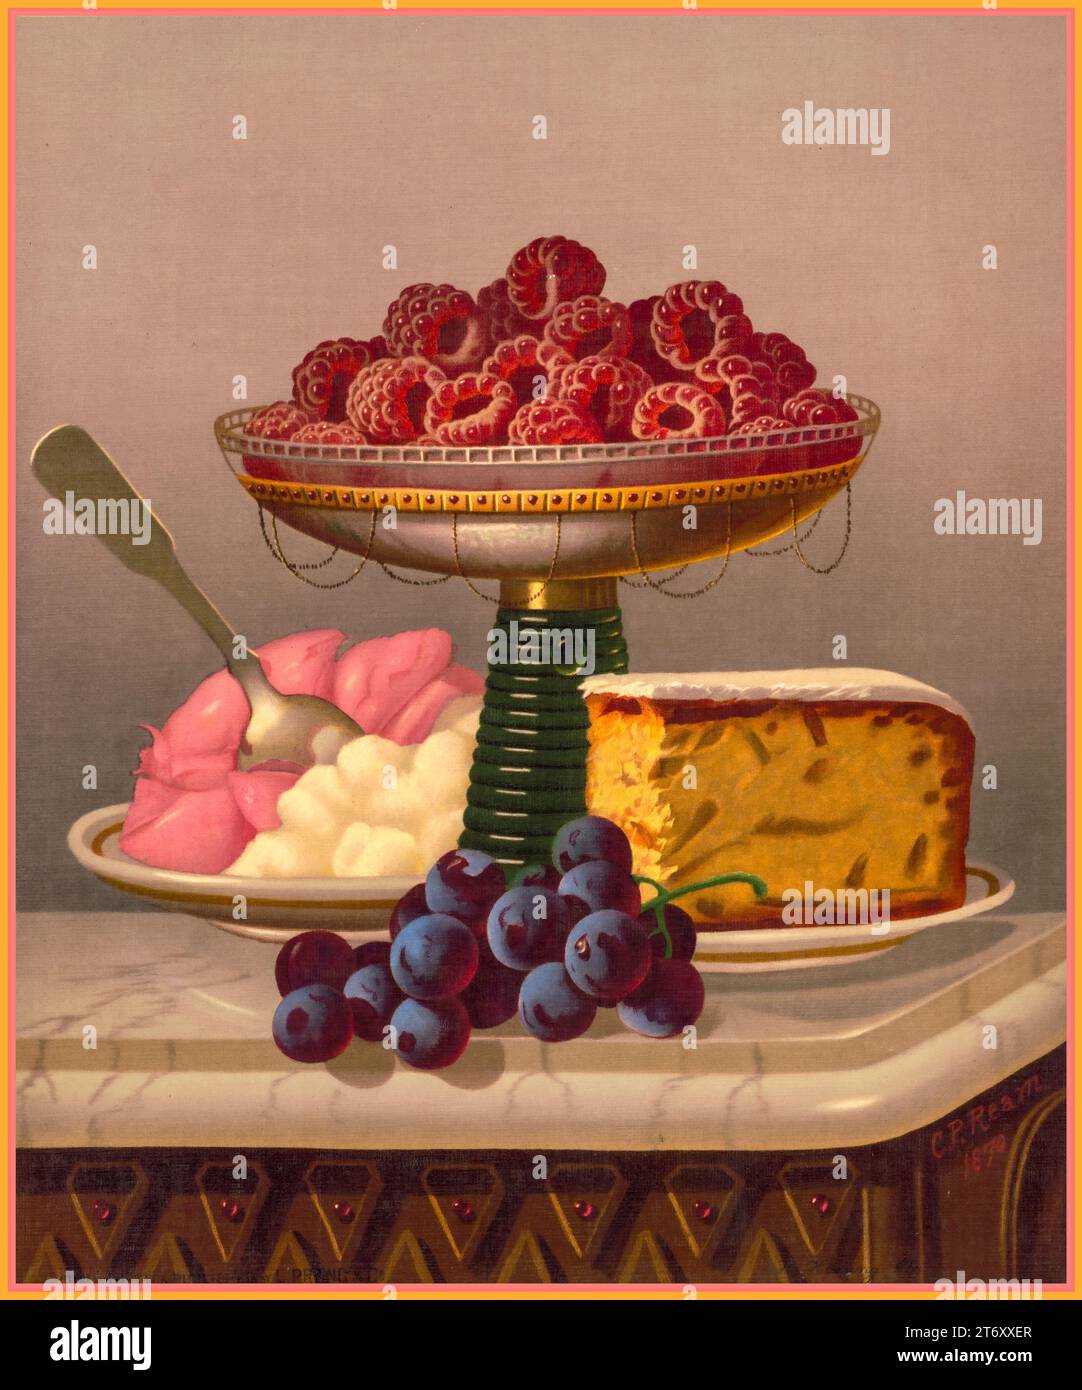 Vintage luxuriöses viktorianisches Dessert 1851 Obst, Kuchen, Eis Dessert. In luxuriöser, gehobener Atmosphäre. Kochbuch Illustration des berühmten Vintage-Chefkochs Alexis Soyer Stockfoto